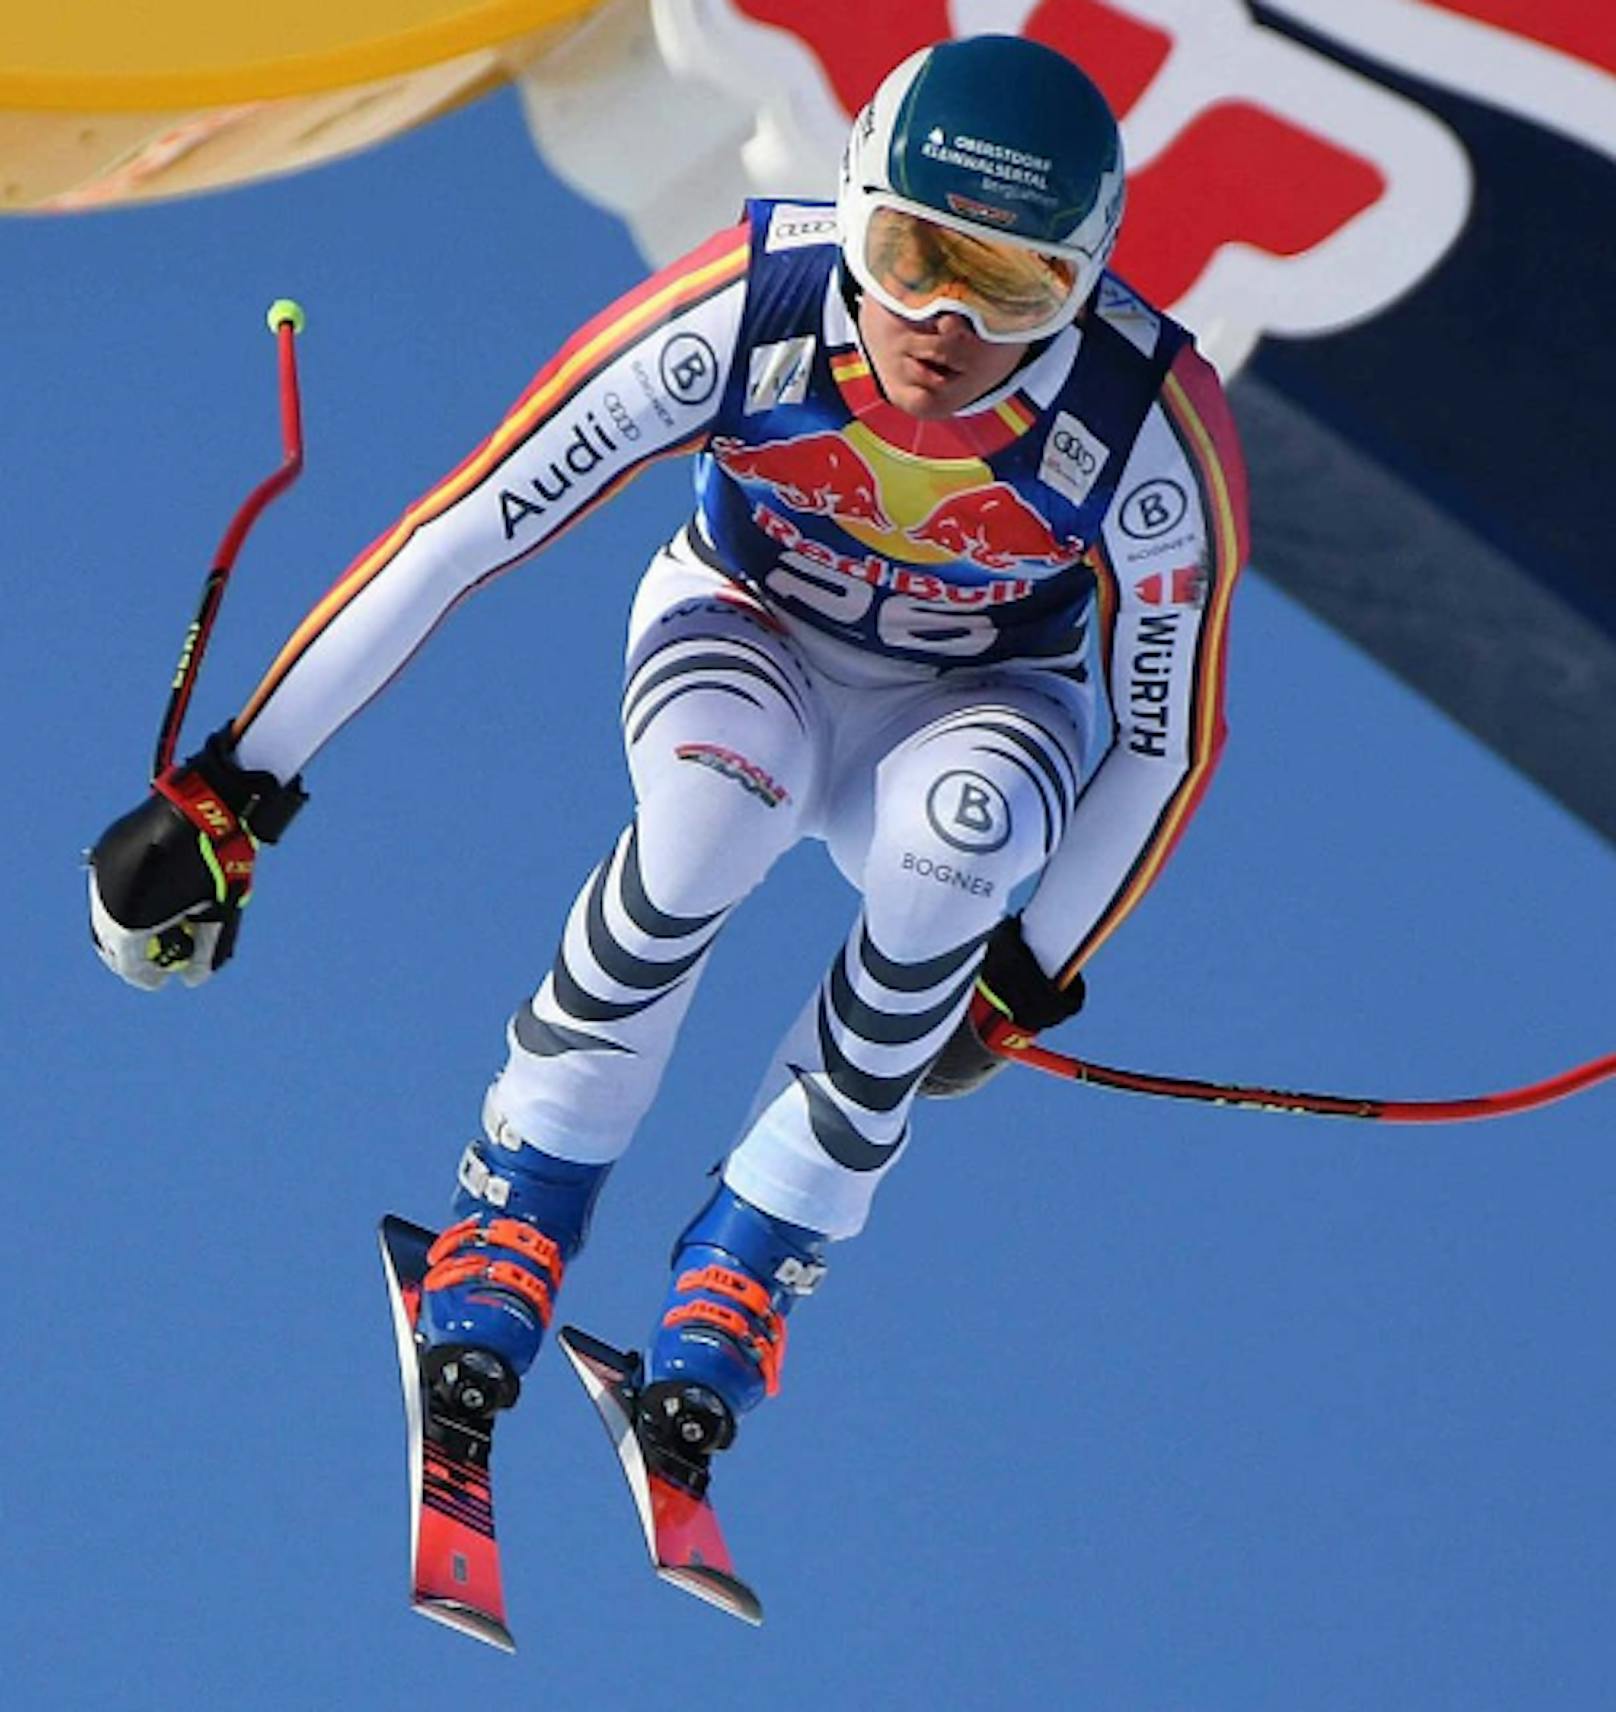 Ski-Ass beendet Karriere: "Nicht bei 100 Prozent"